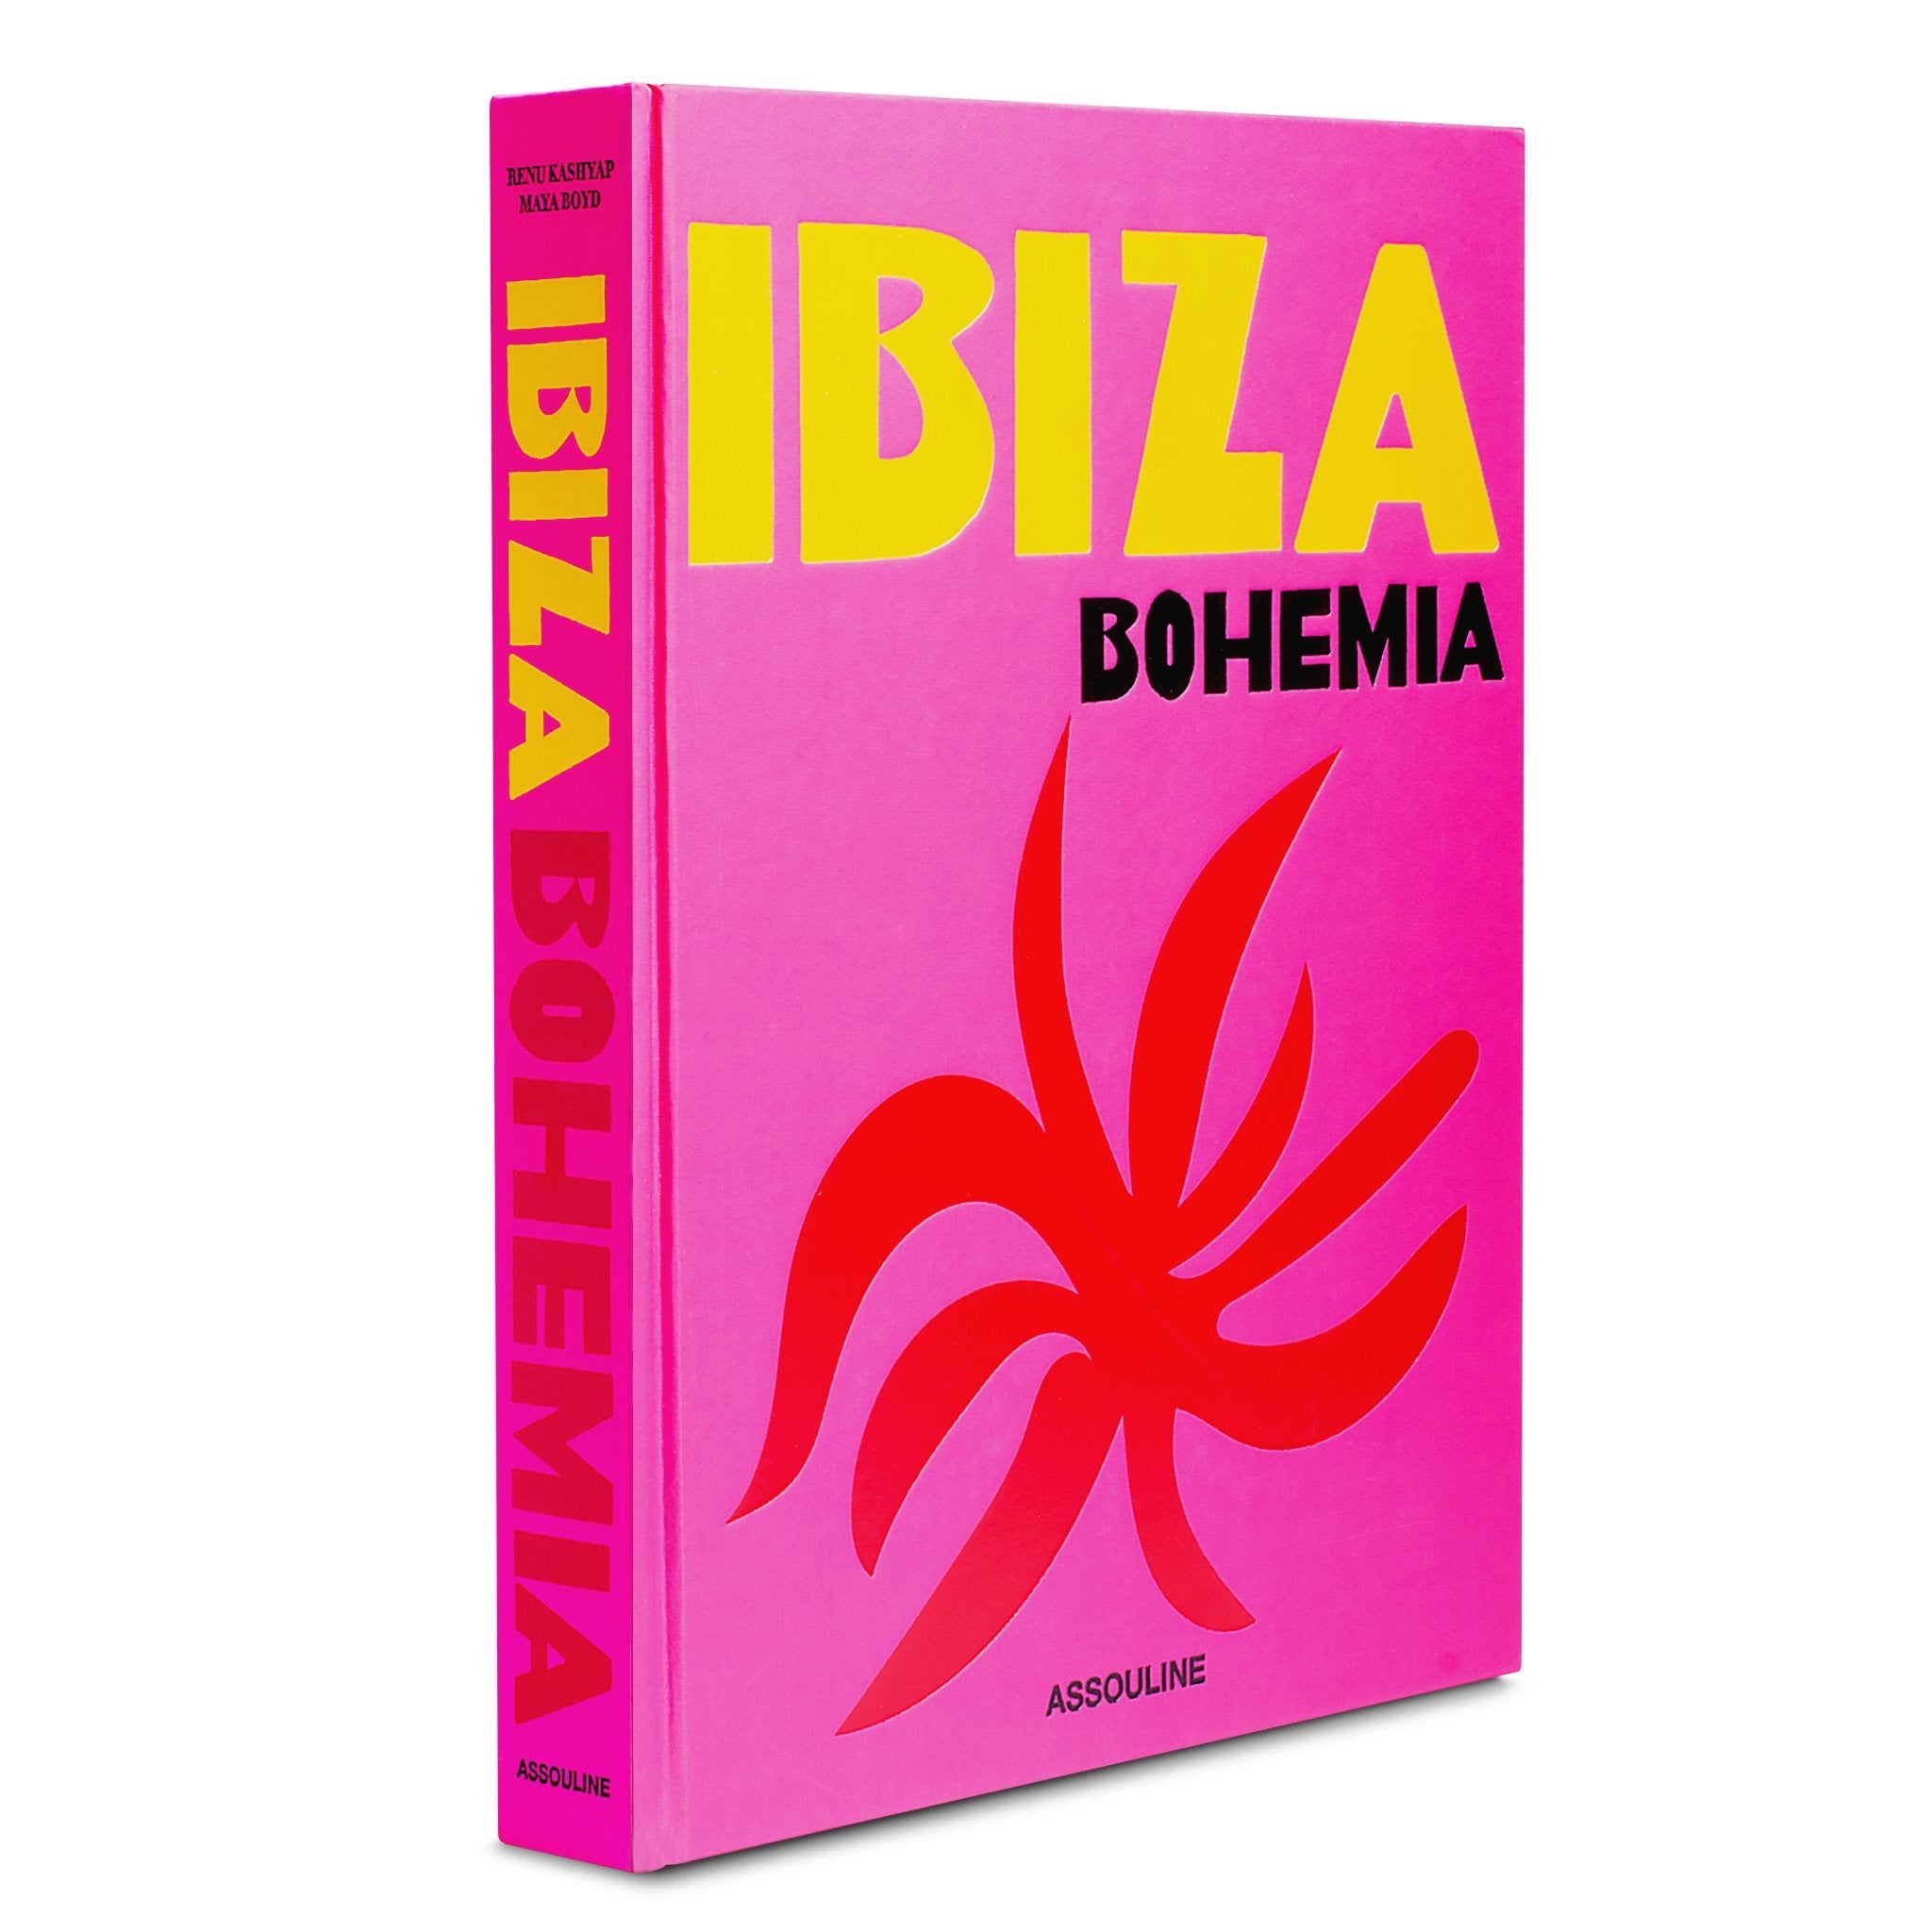 ASSOULINE Ibiza Bohemia Hardcover Book by Renu Kashyap